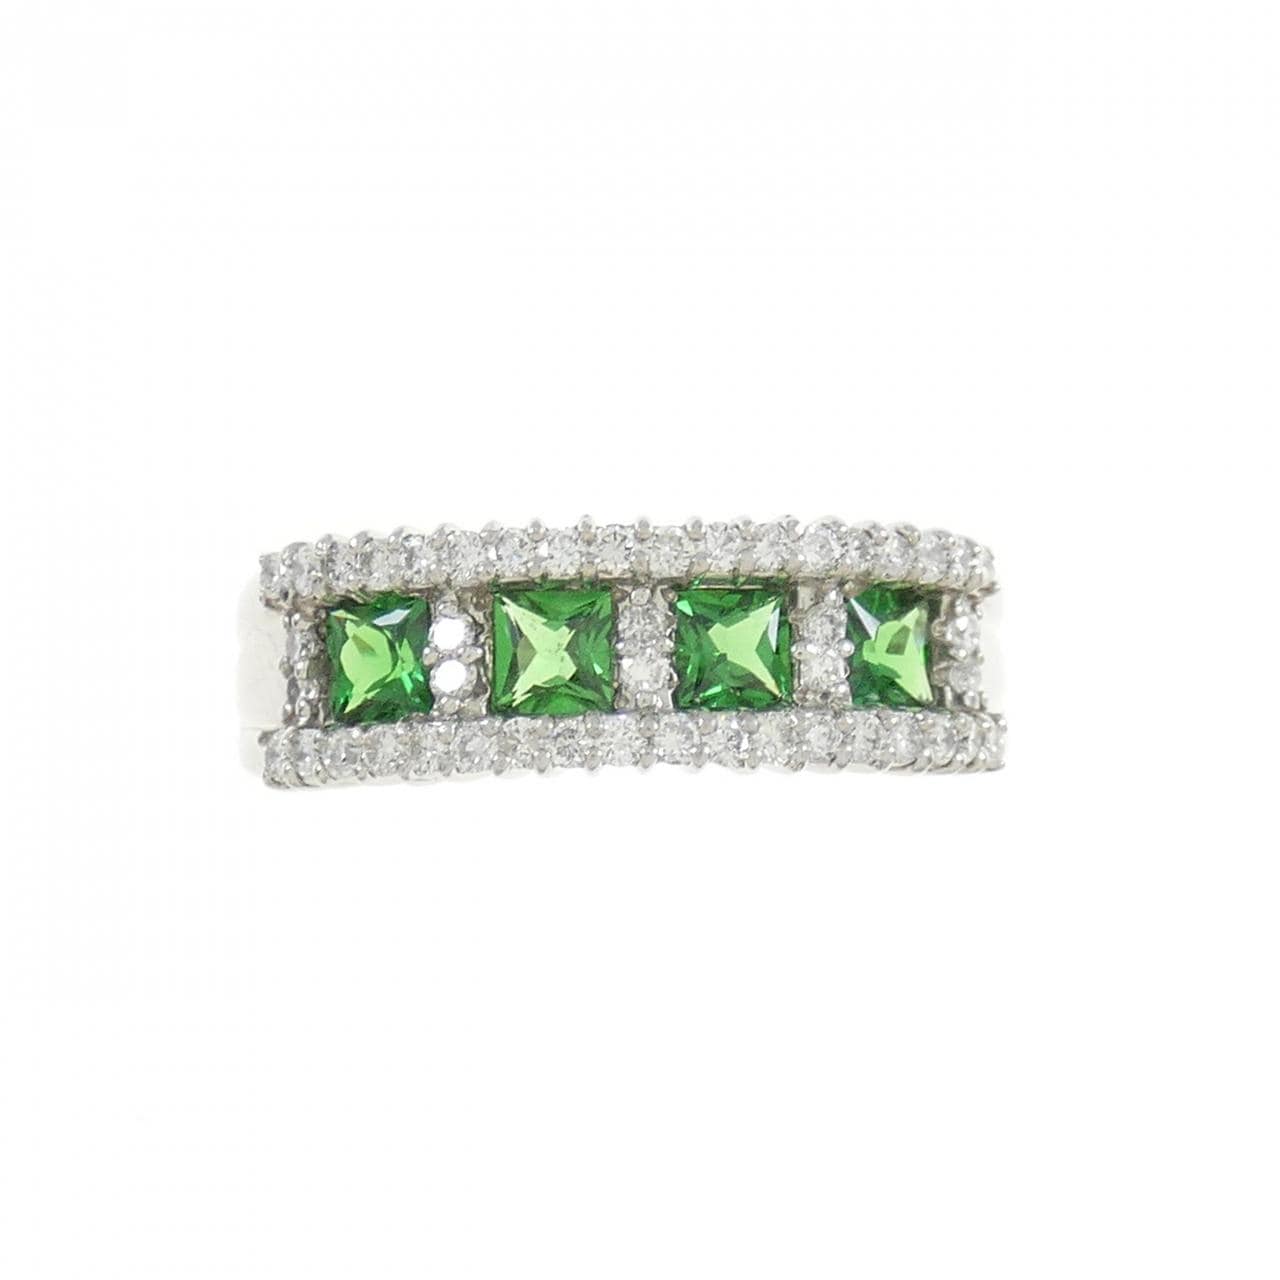 PT Green Garnet Ring 0.65CT